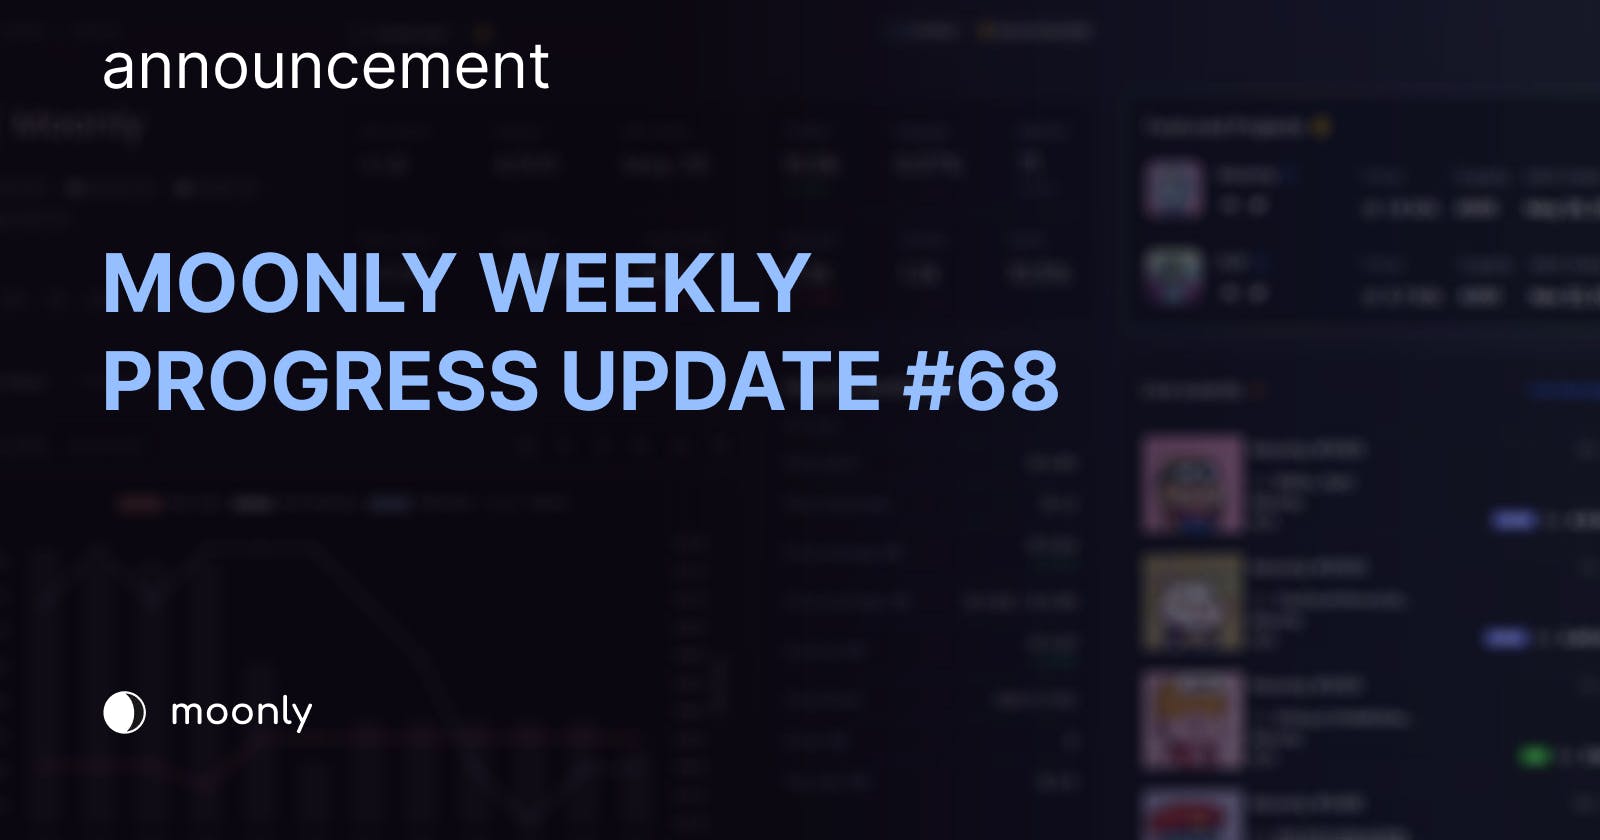 Moonly weekly progress update #68 - Wallet checker improvements